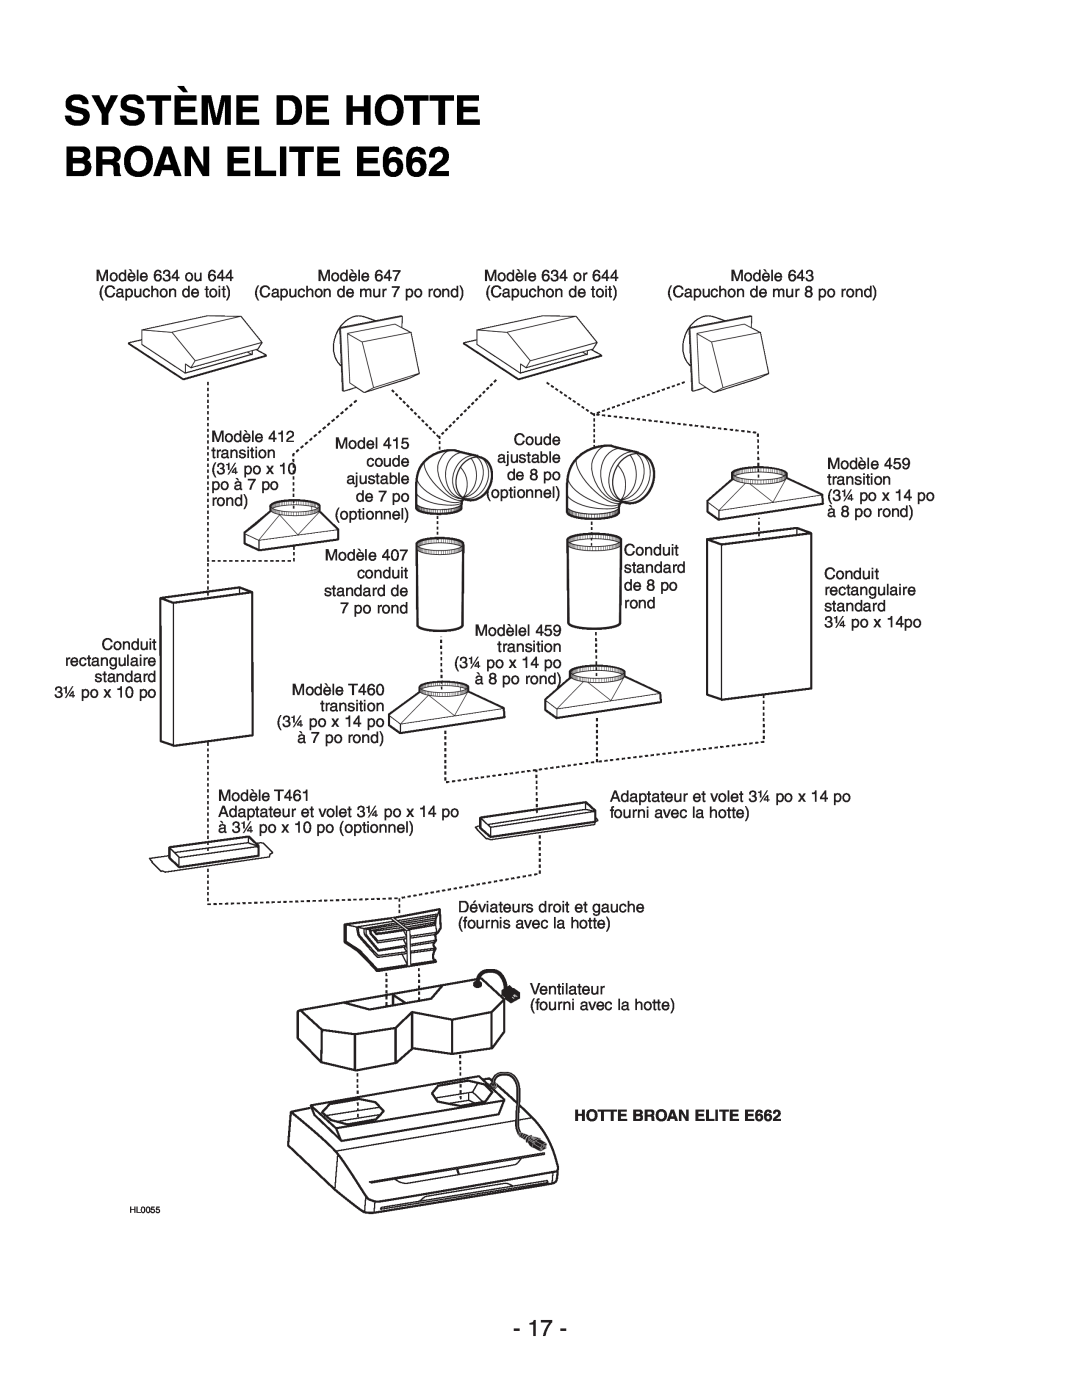 Broan Model E662 installation instructions SYSTÈME DE HOTTE BROAN ELITE E662 